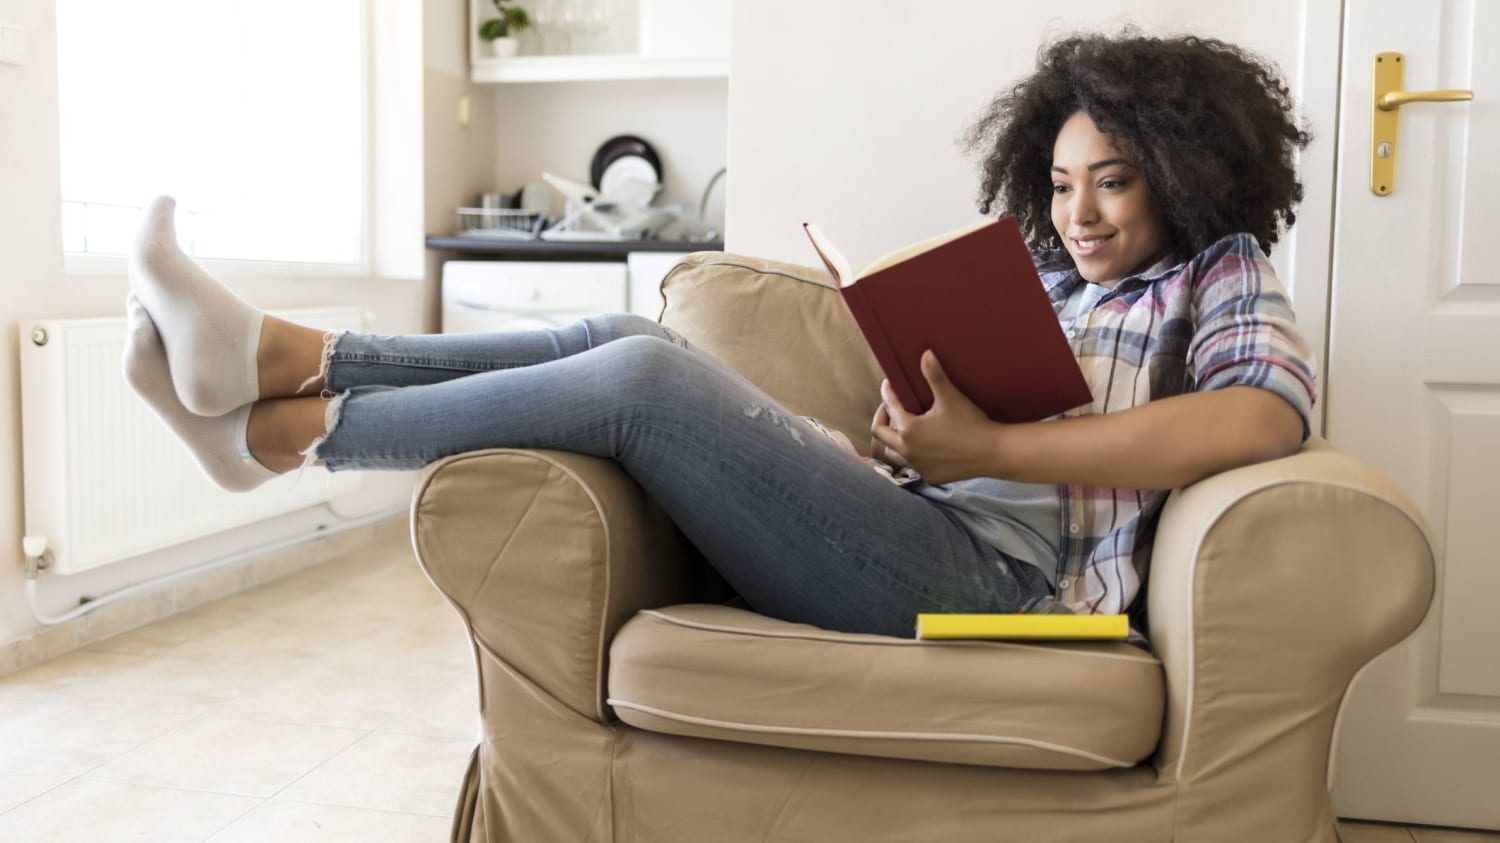 Unique habits. Чтение книг для карты желаний. Read a book. Забота о себе релакс. Woman reading book.